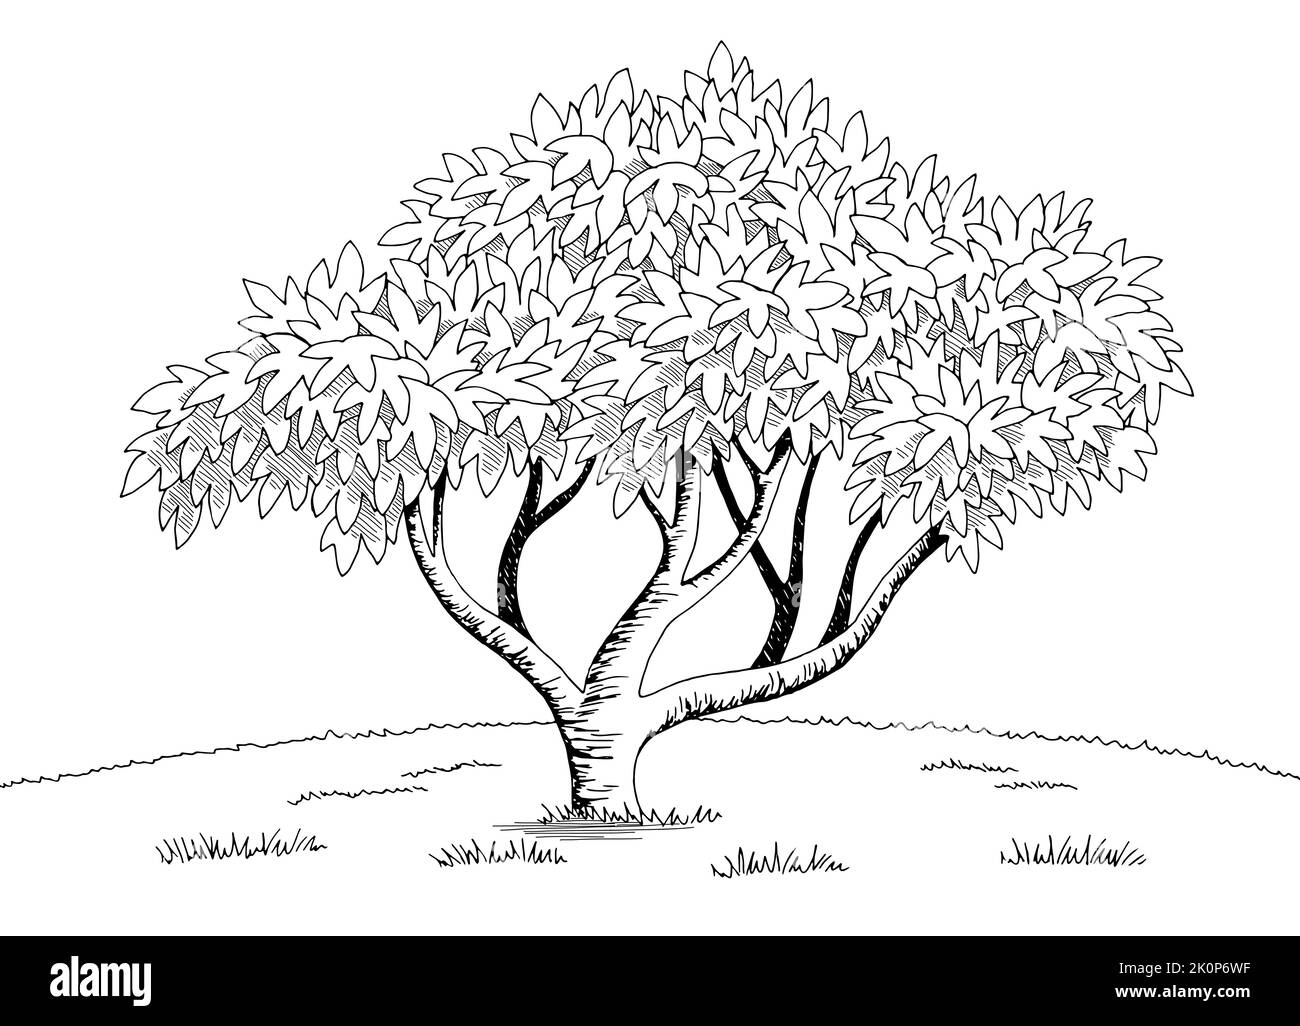 Abb. Baum Grafik schwarz weiß Landschaft Skizze Illustration Vektor Stock Vektor